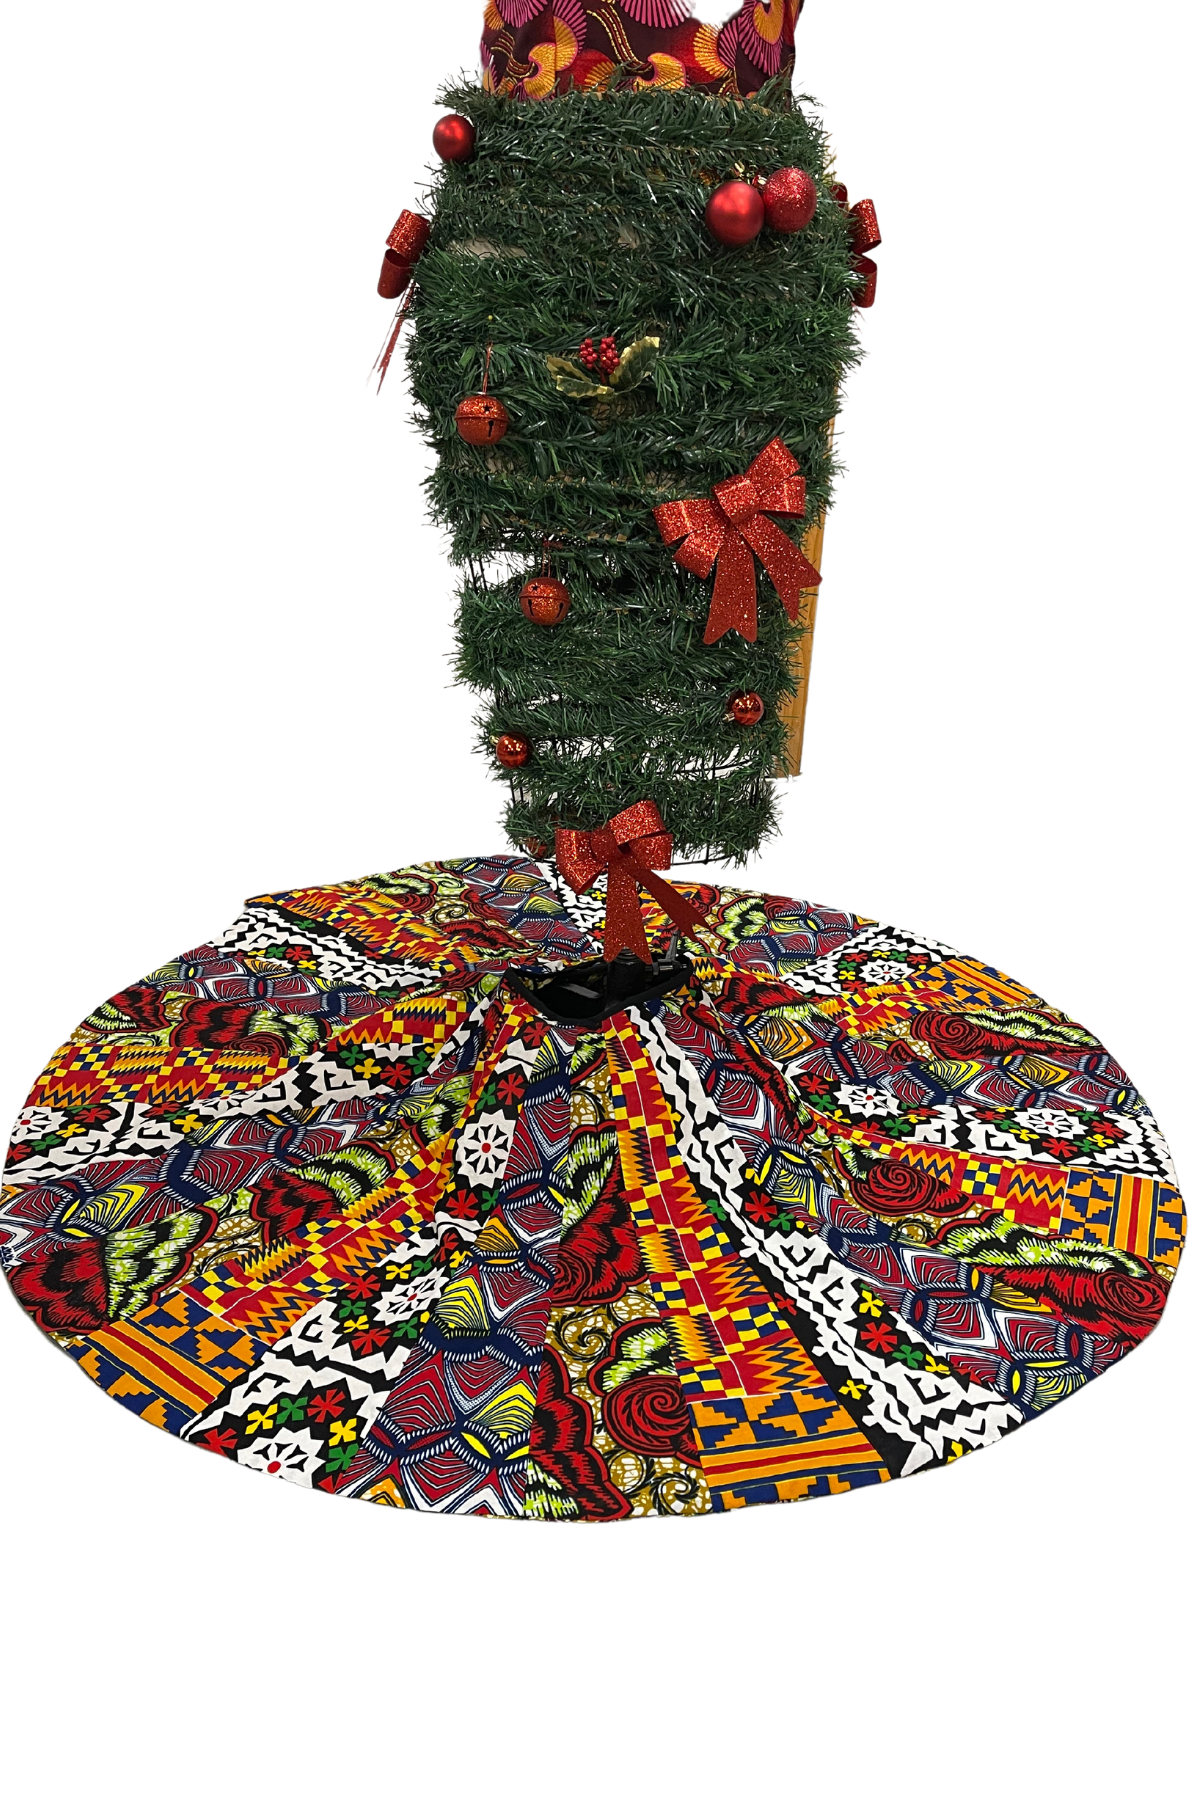 Holiday Tree Skirt Pattern